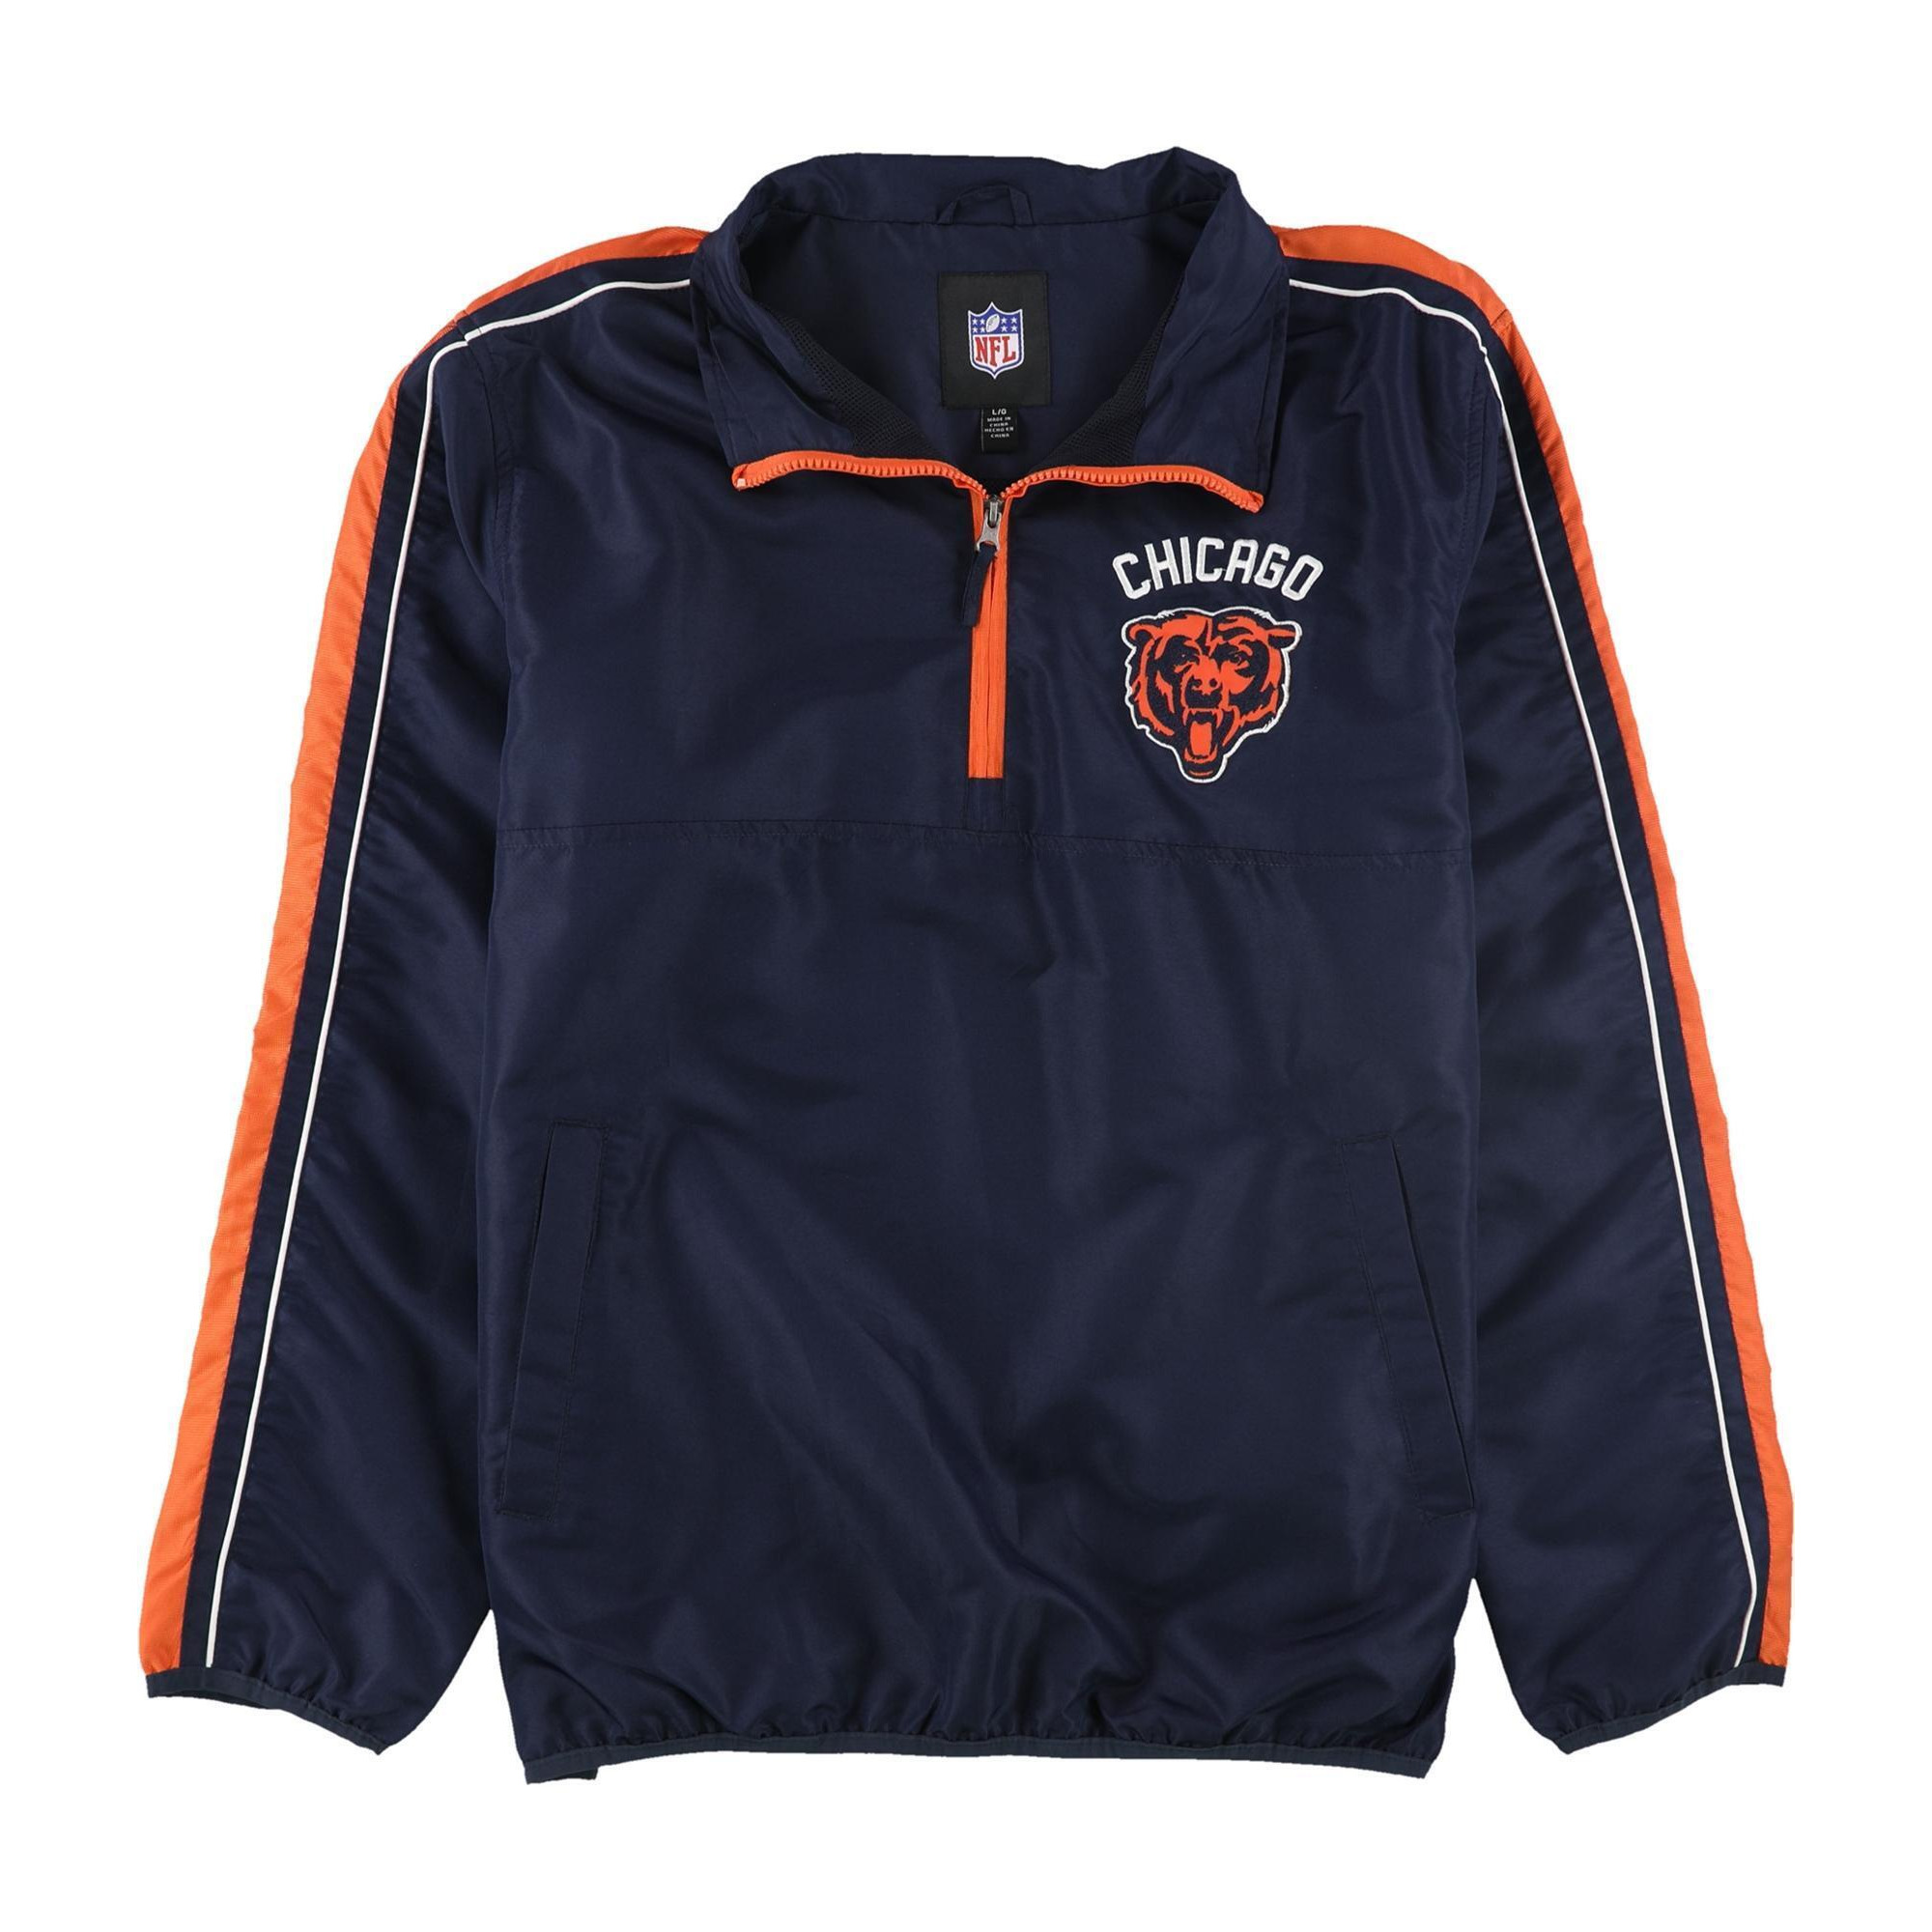 NFL Mens Chicago Bears Track Jacket Sweatshirt, Style # LA4-902-1